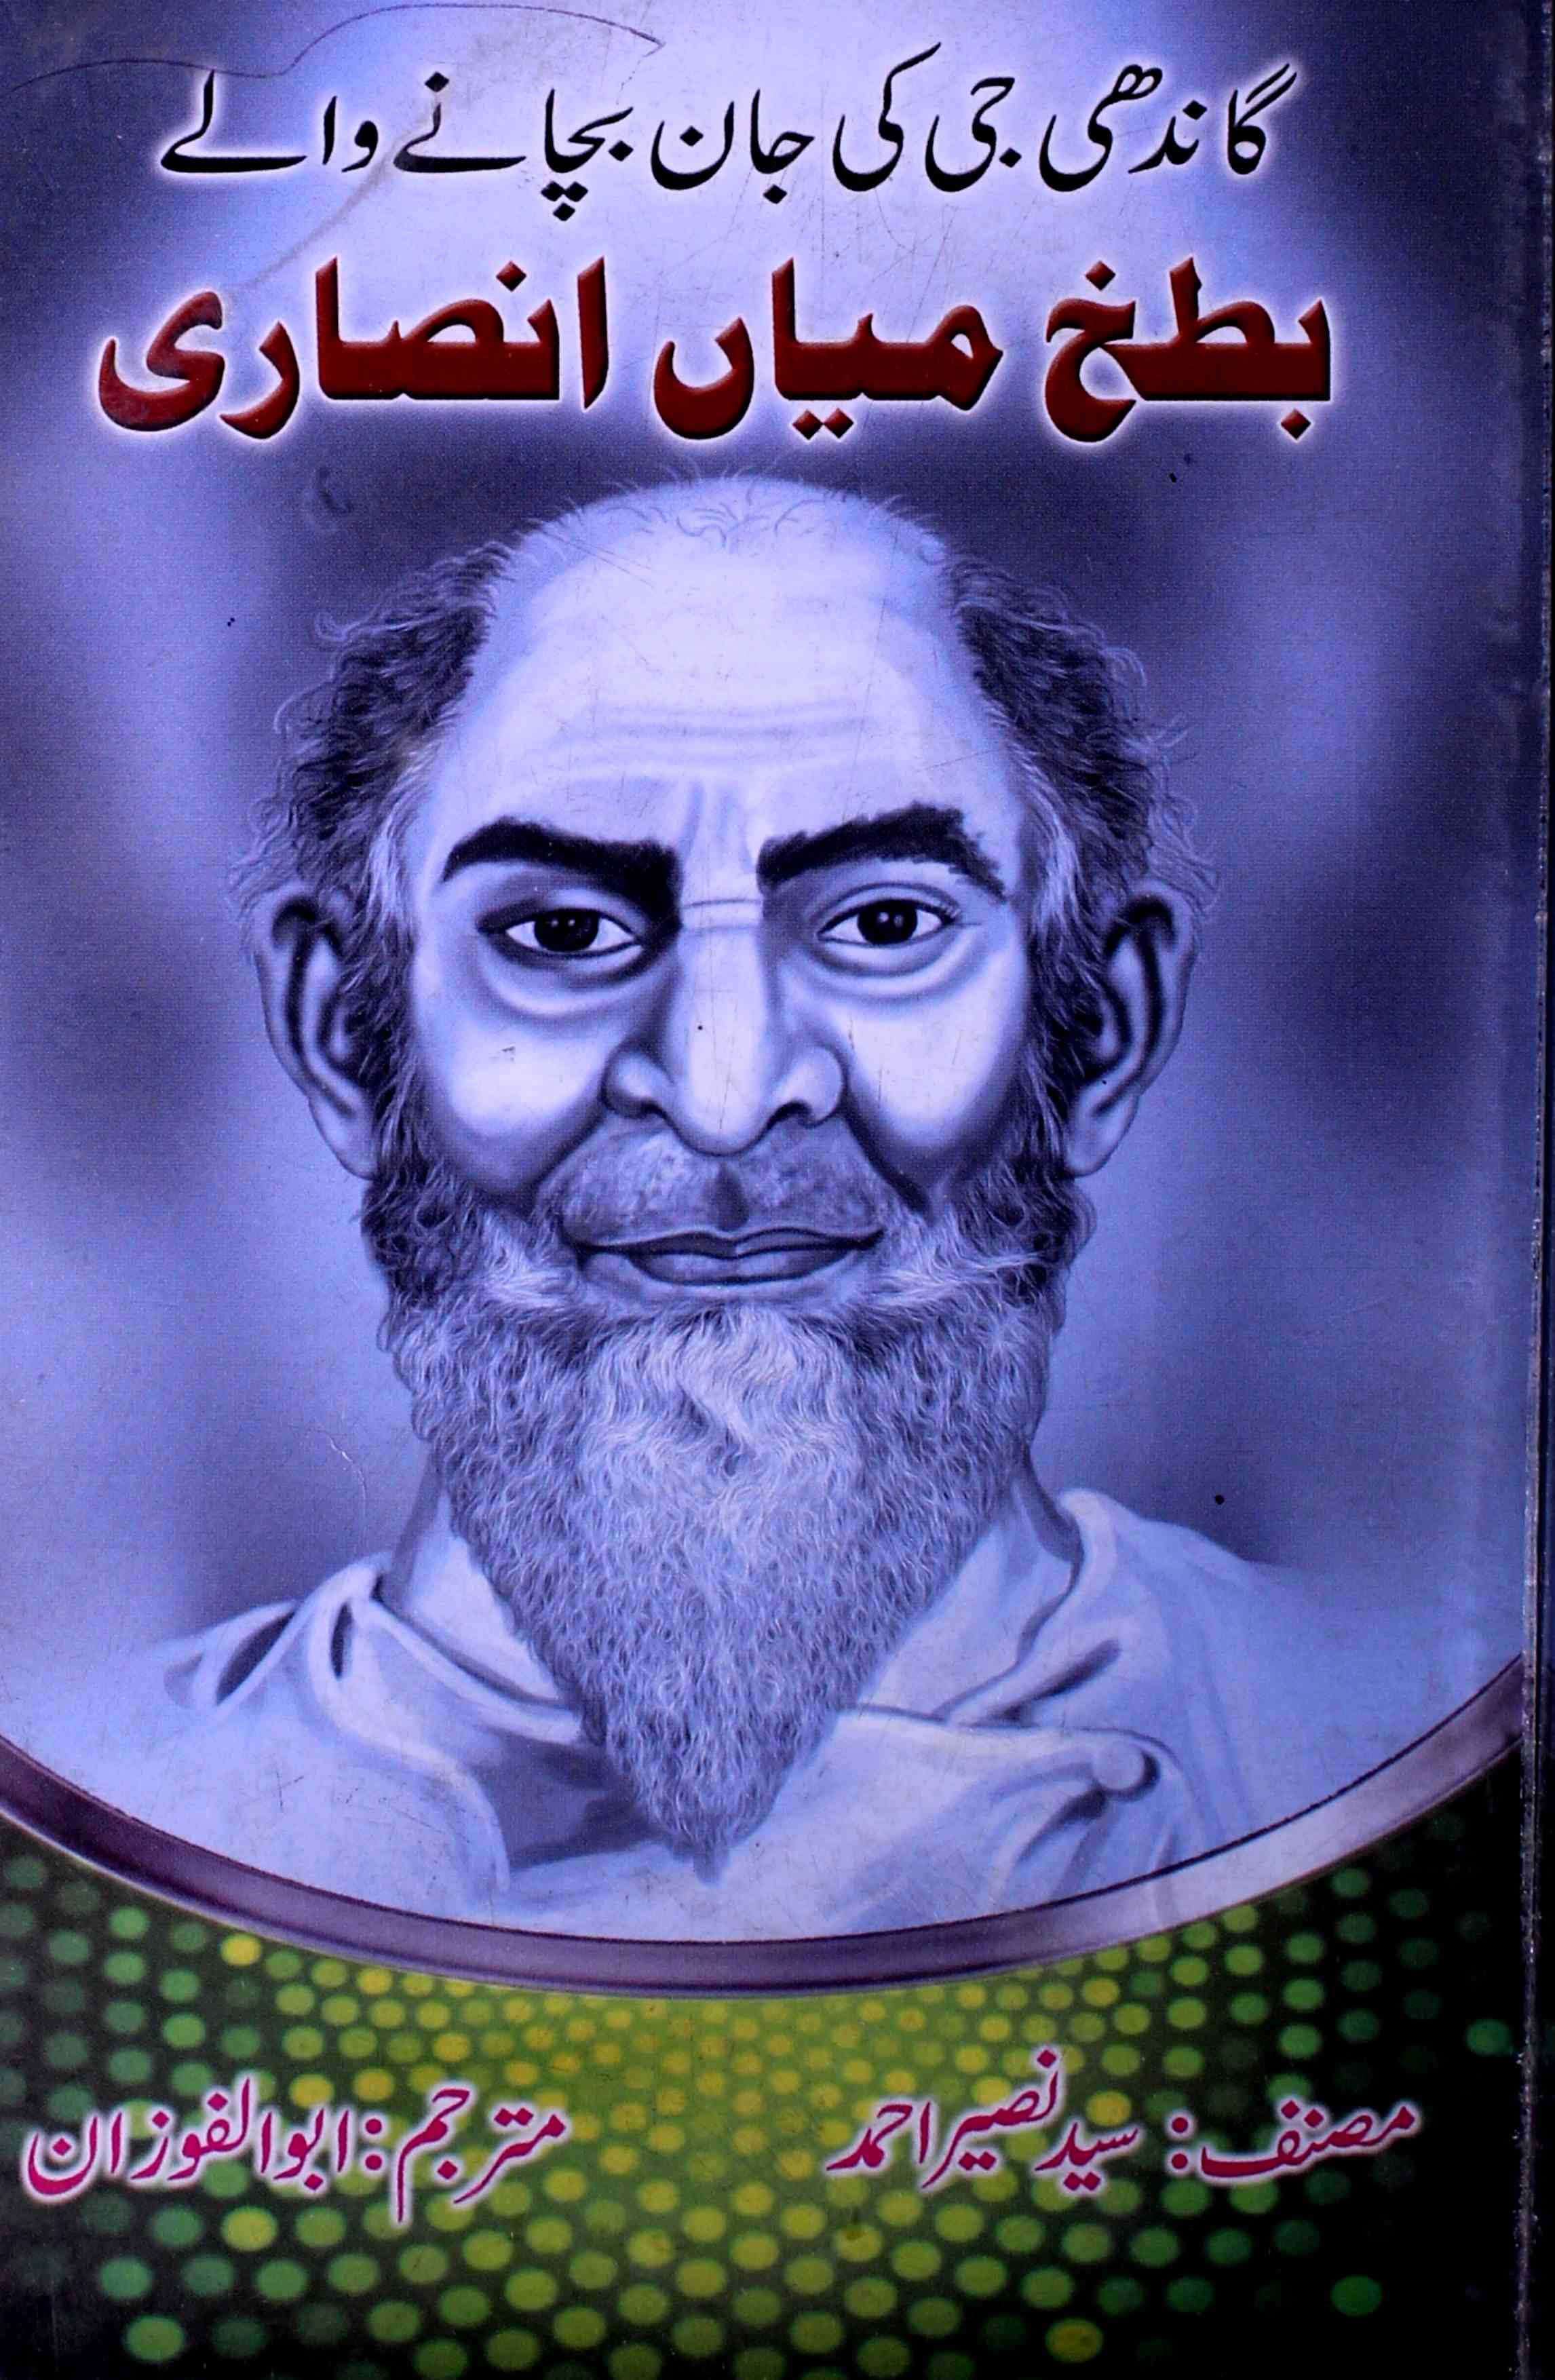 Gandhi Ji Ki Jan Bachane Wale Batakh Miyan Ansari